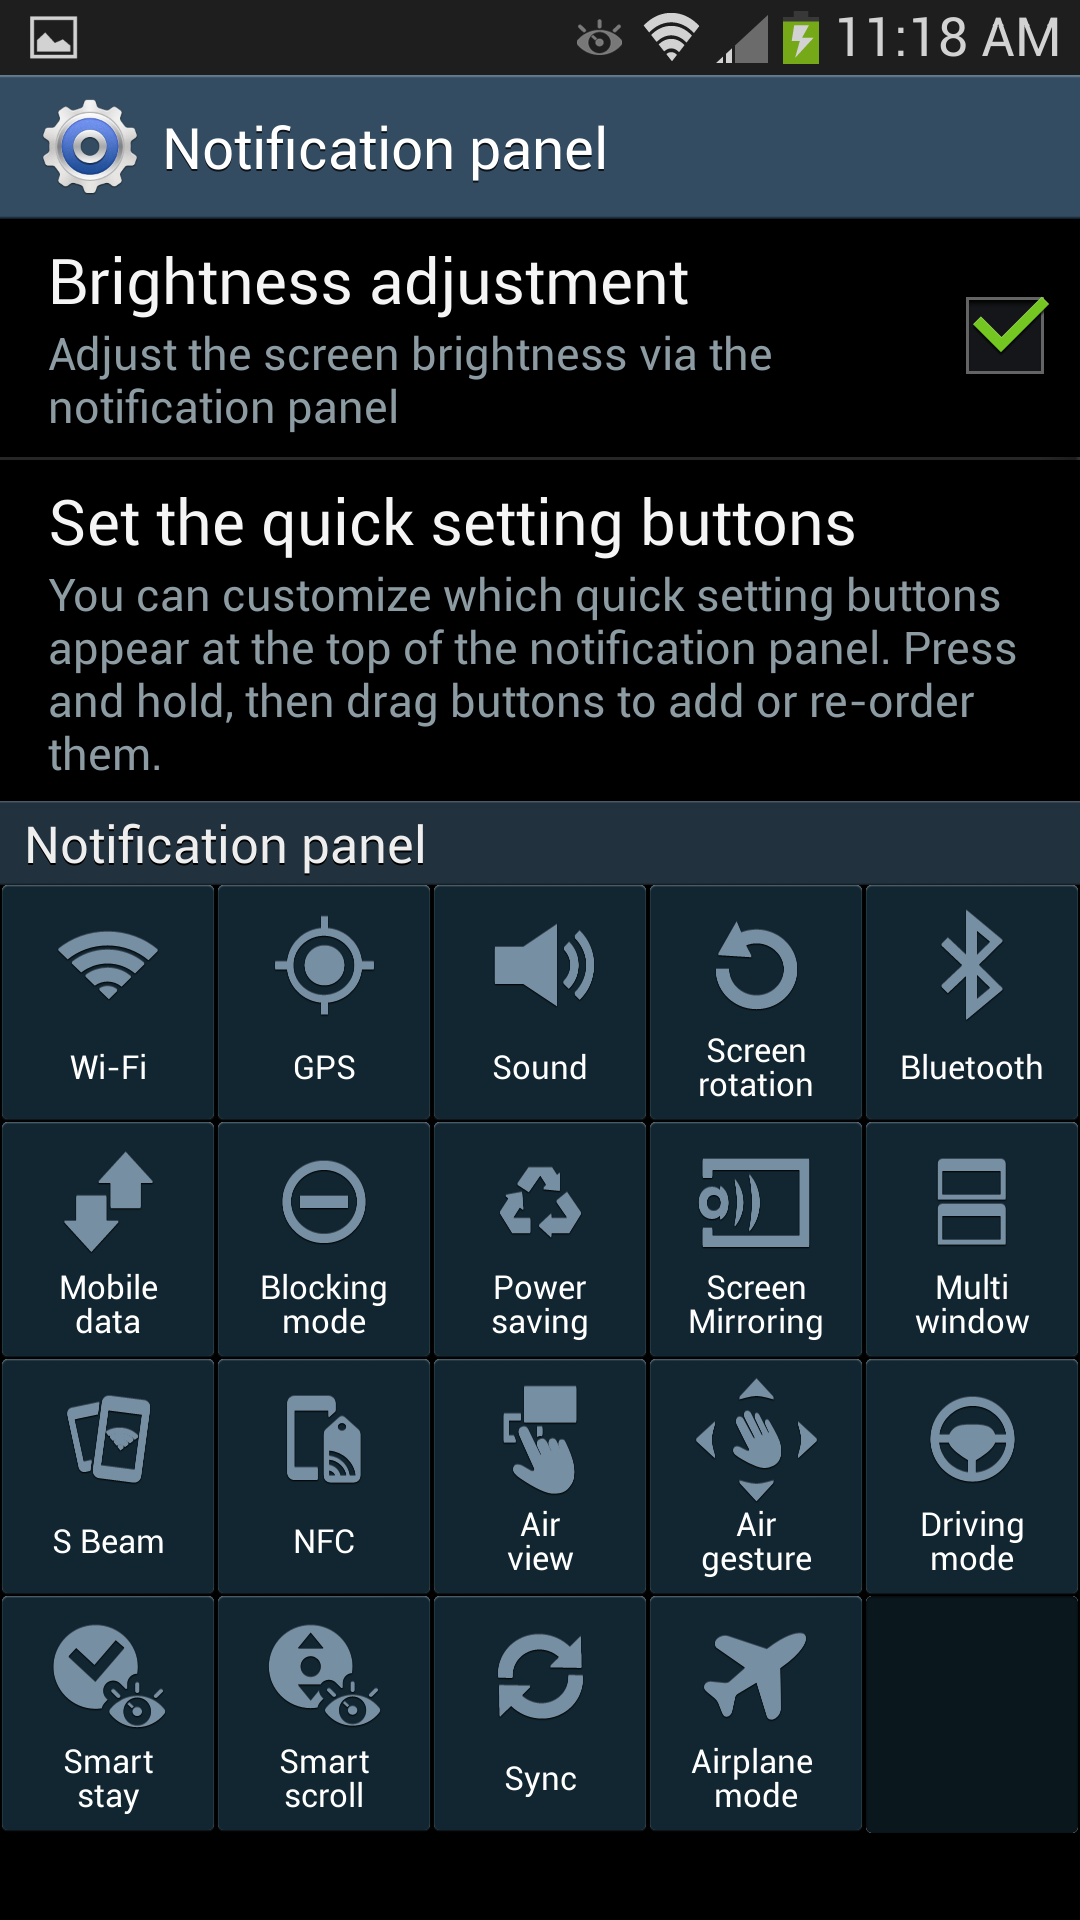 Samsung Galaxy S4 Icons at Top of Screen